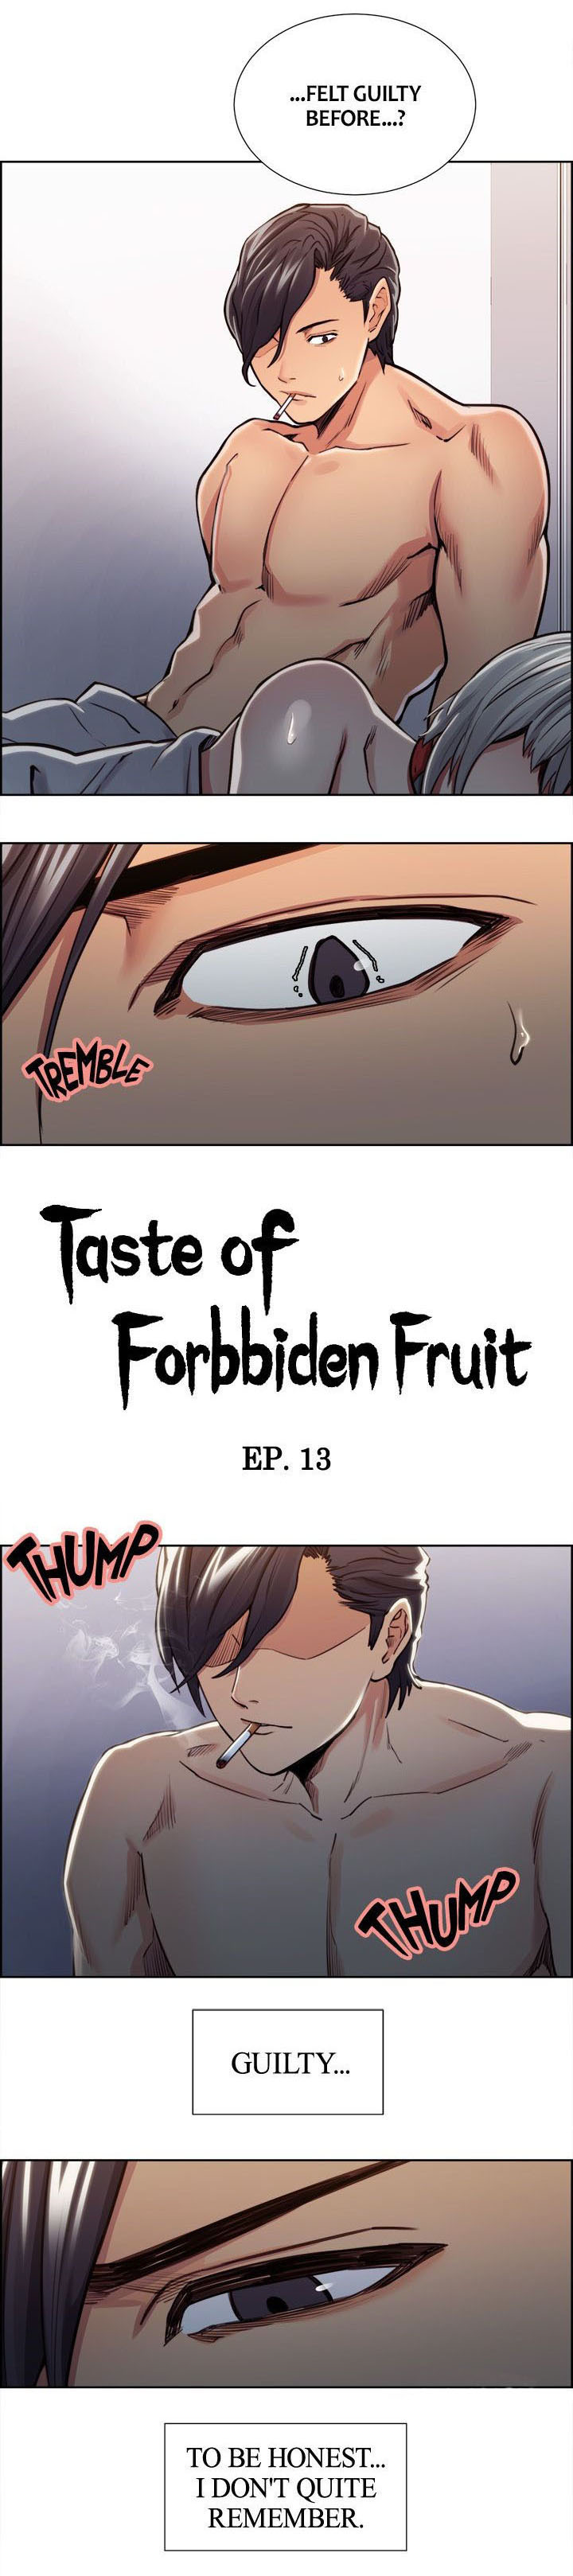 [Serious] Taste of Forbbiden Fruit Ch.19/24